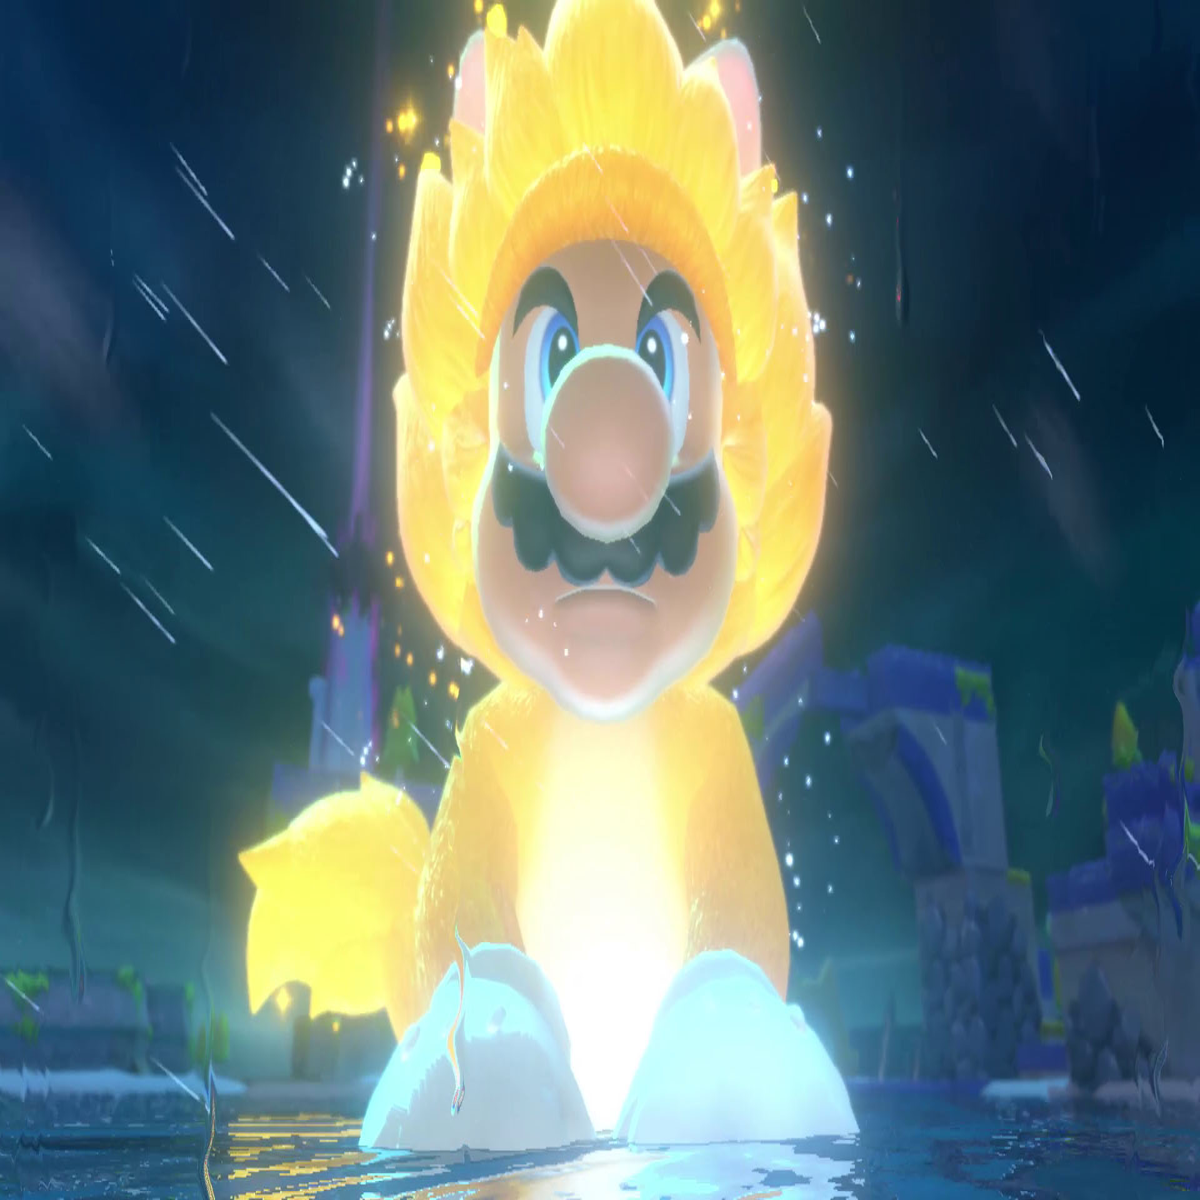 Super Mario 3D World + Bowser's Fury - Official Trailer 